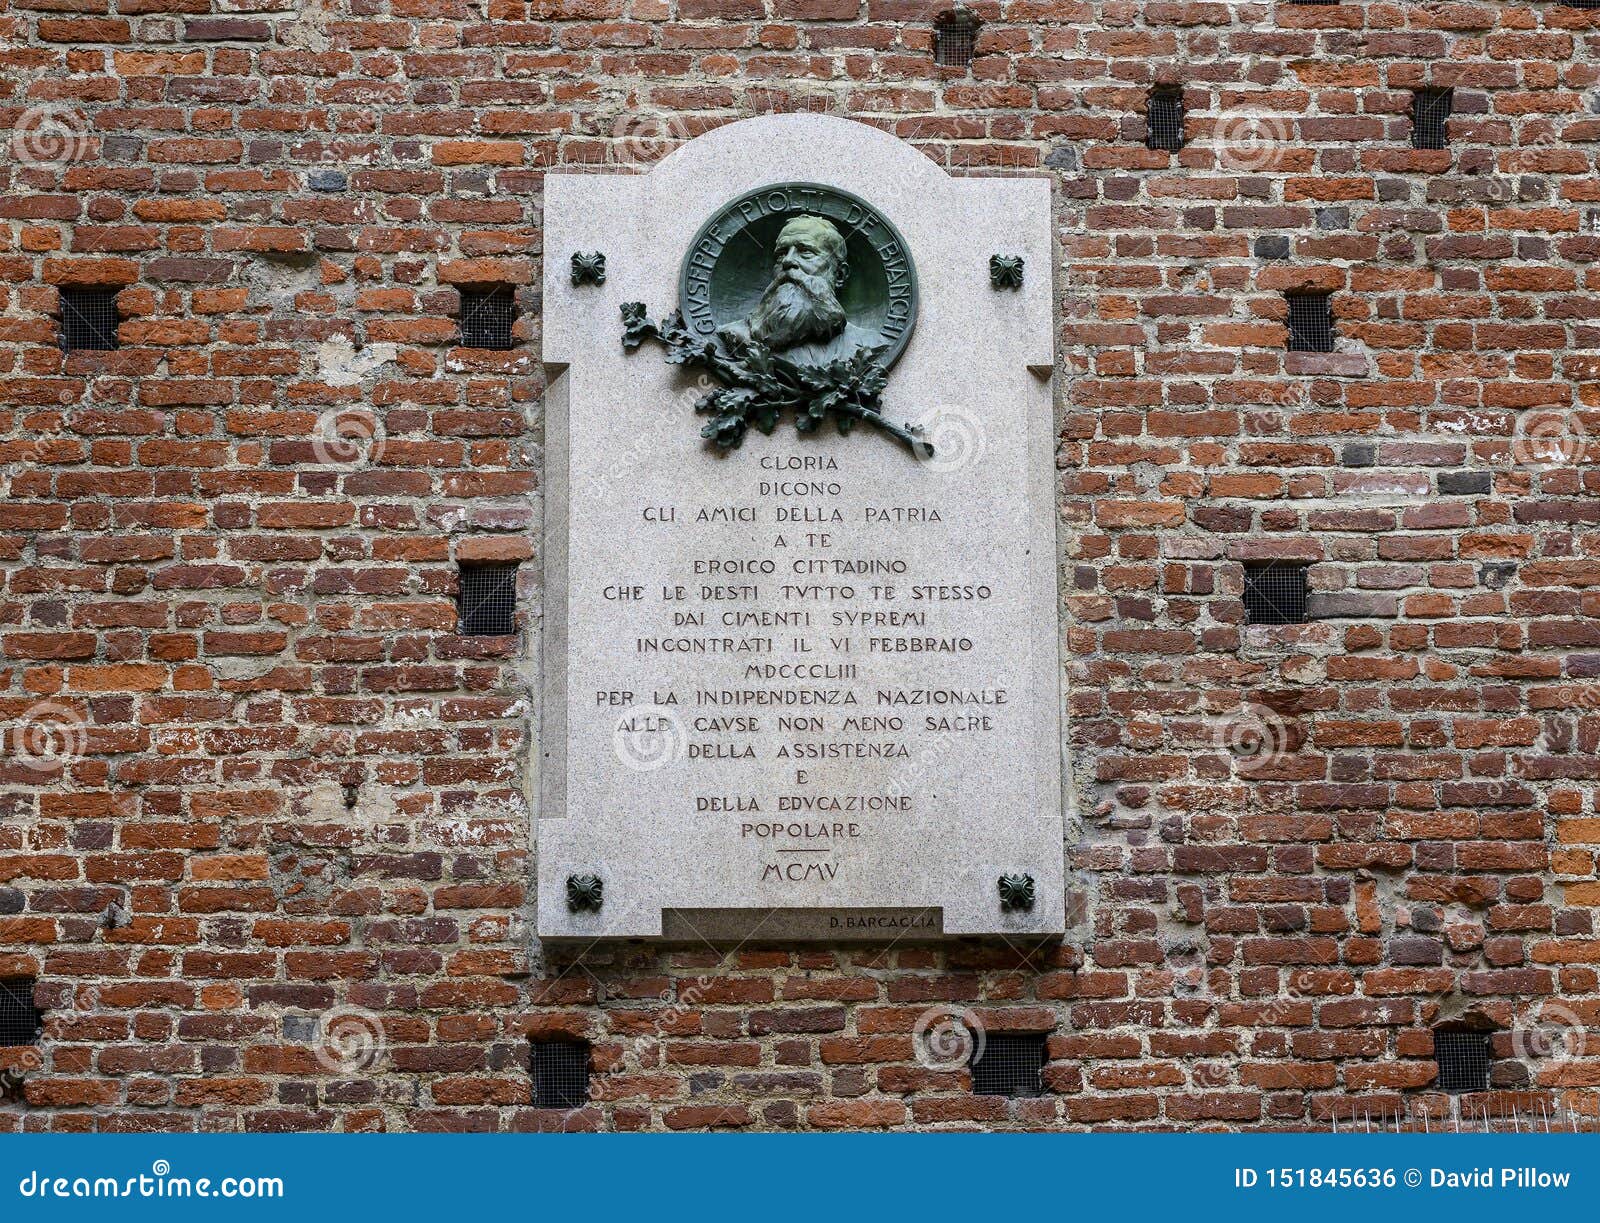 plaque to commemorate giuseppe piolti de bianchi, sforza castle  in milan, italy